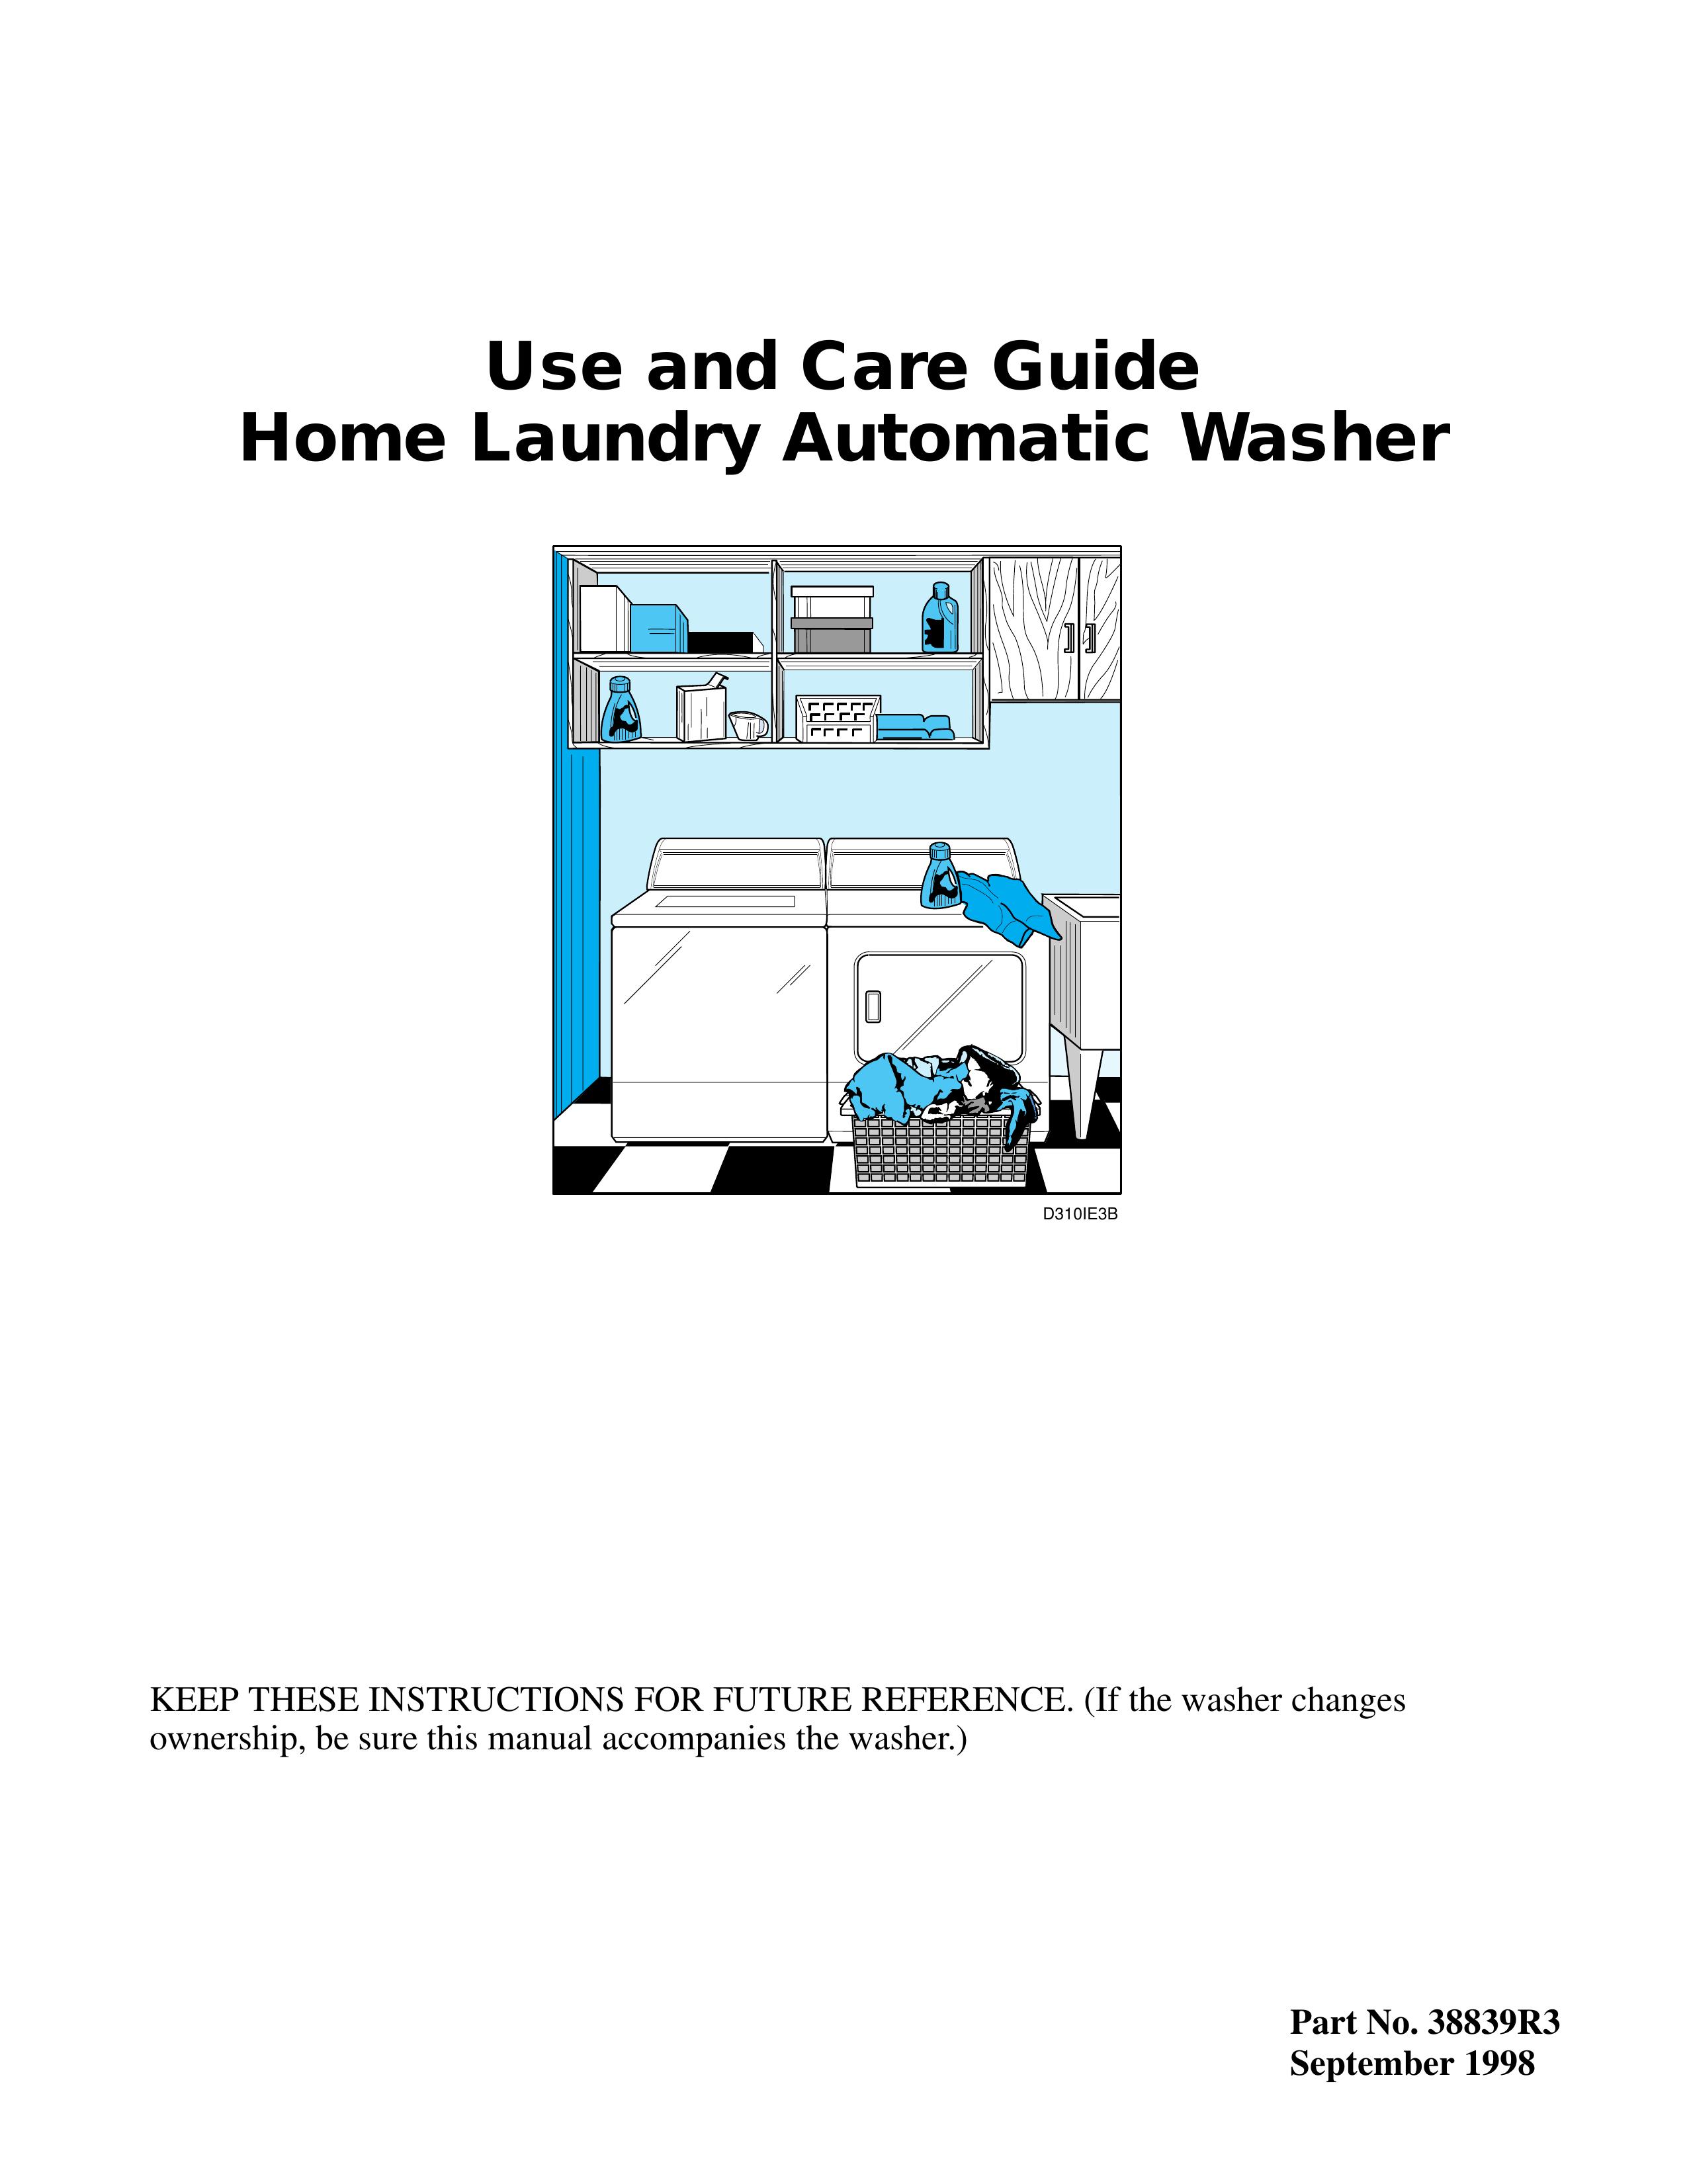 Amana Home Laundry Automatic Washer Washer User Manual